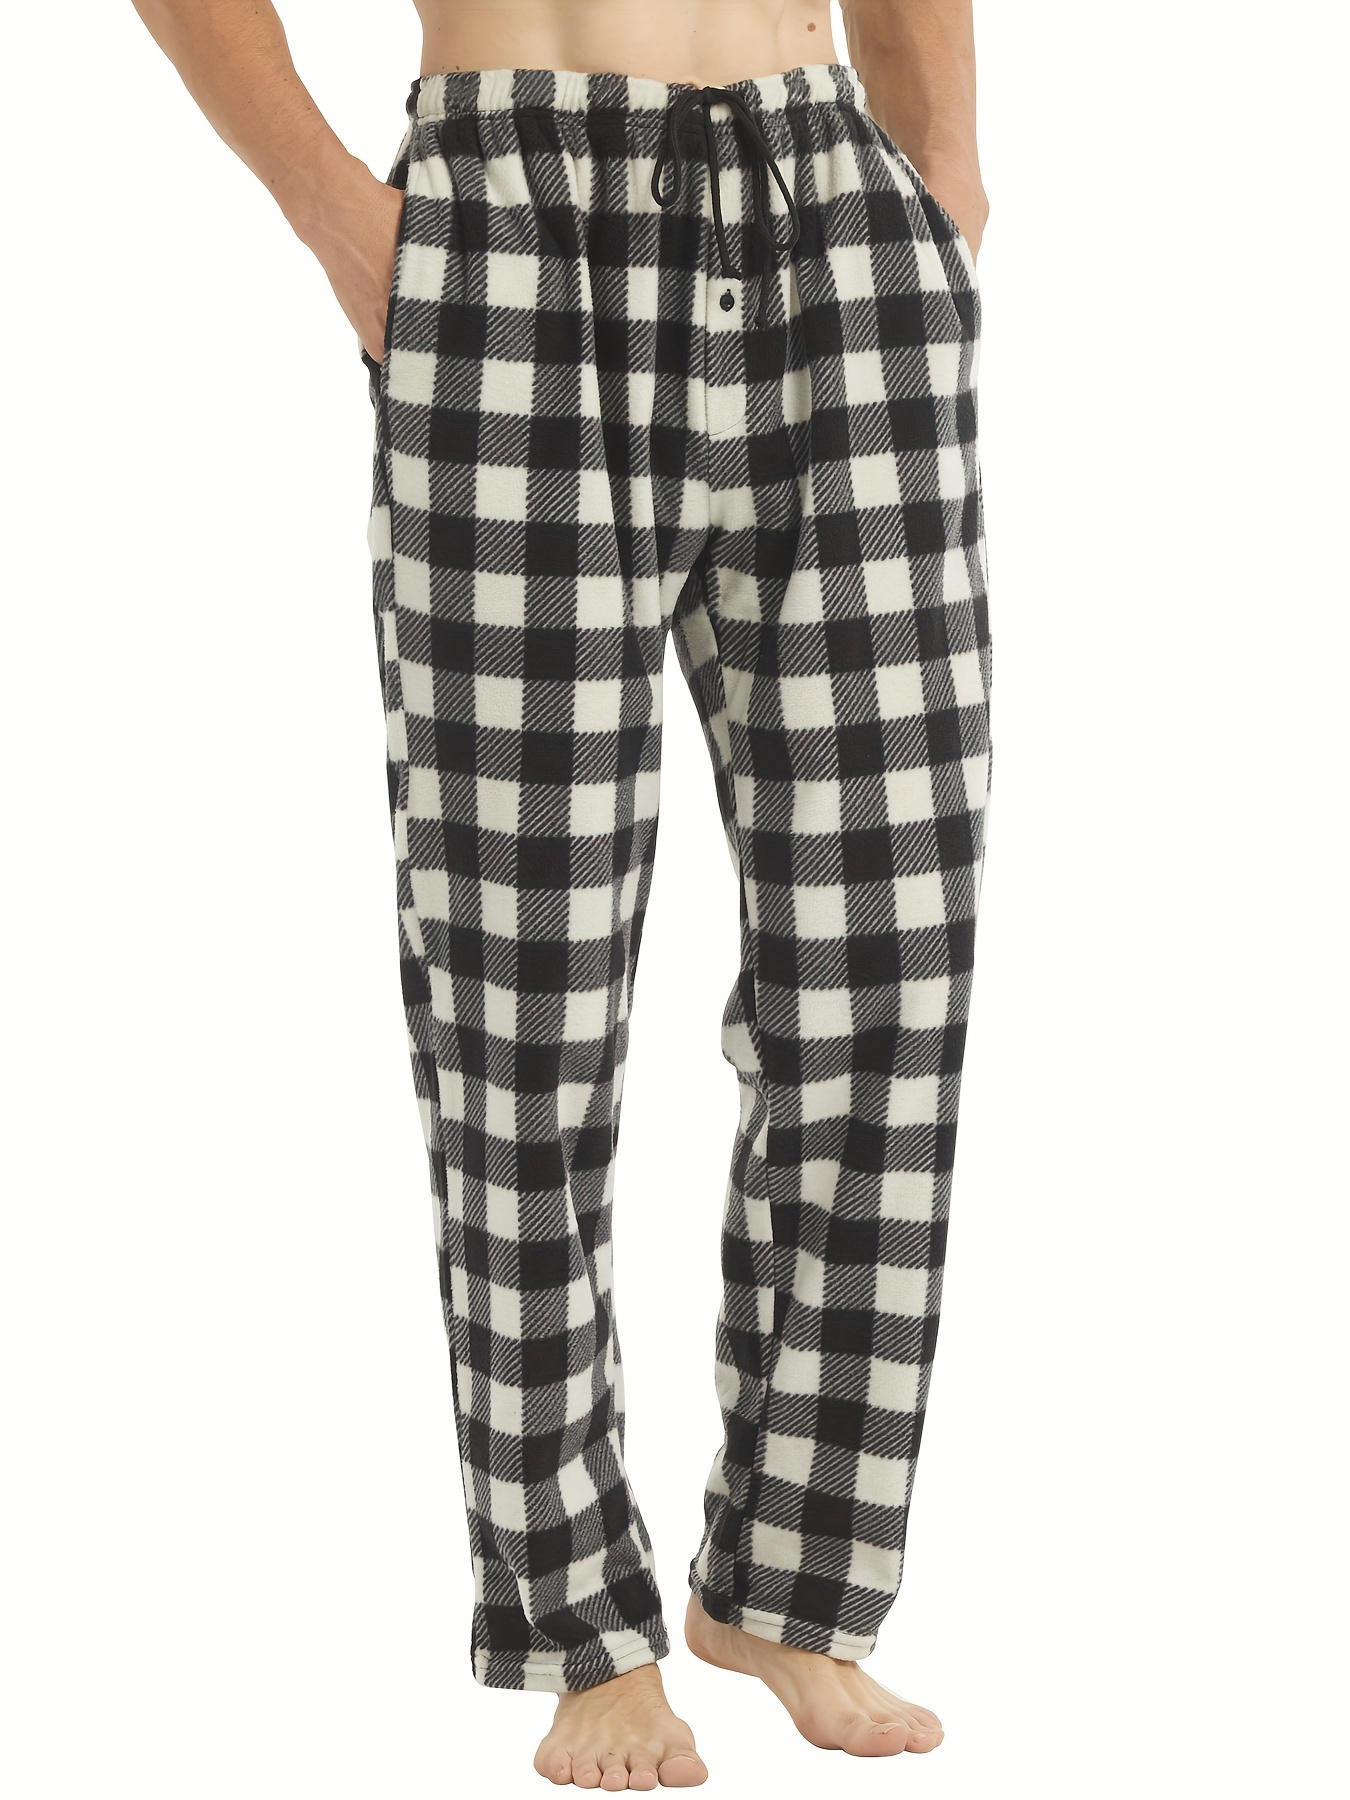 Men's Casual Cotton Pajama Long Pant, Elastic Waistband Plaid Sleepwear  Lounge Pants